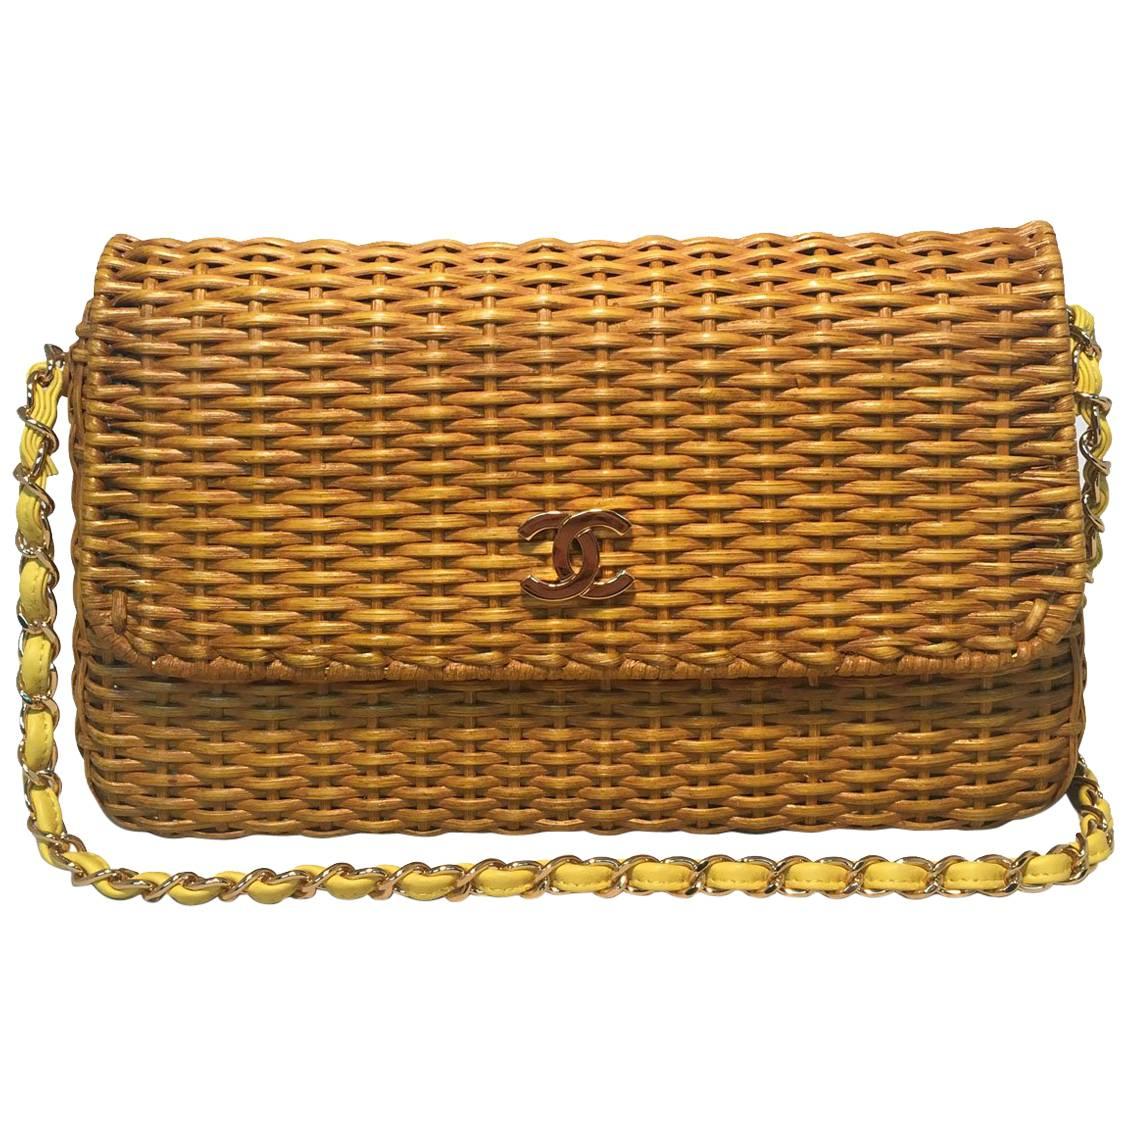 Chanel Tan Wicker Rattan Basket Yellow Leather Classic Flap Shoulder Bag